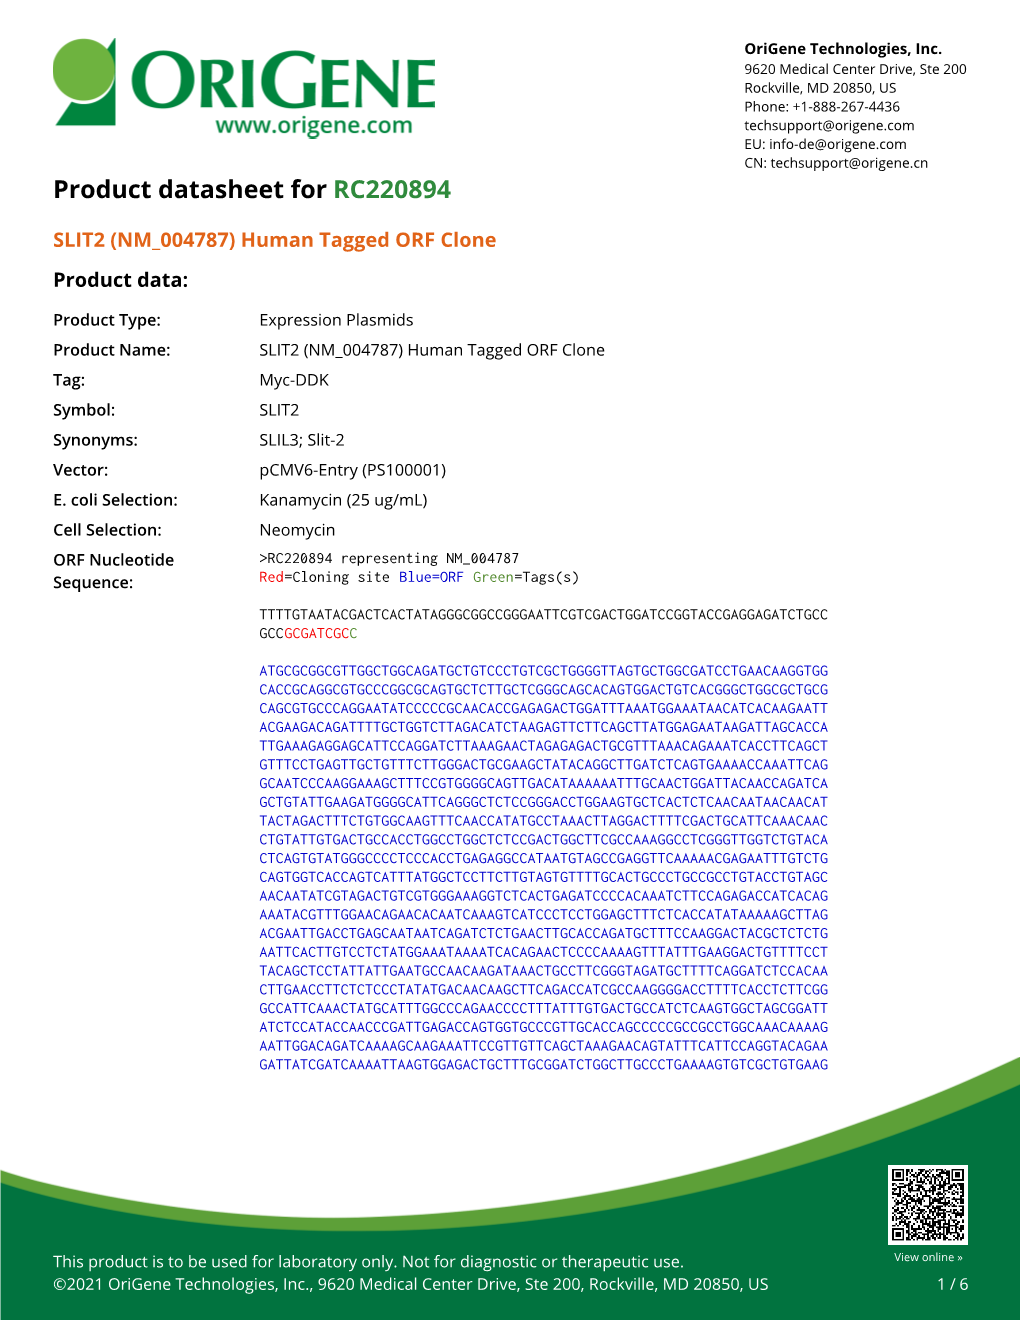 SLIT2 (NM 004787) Human Tagged ORF Clone – RC220894 | Origene